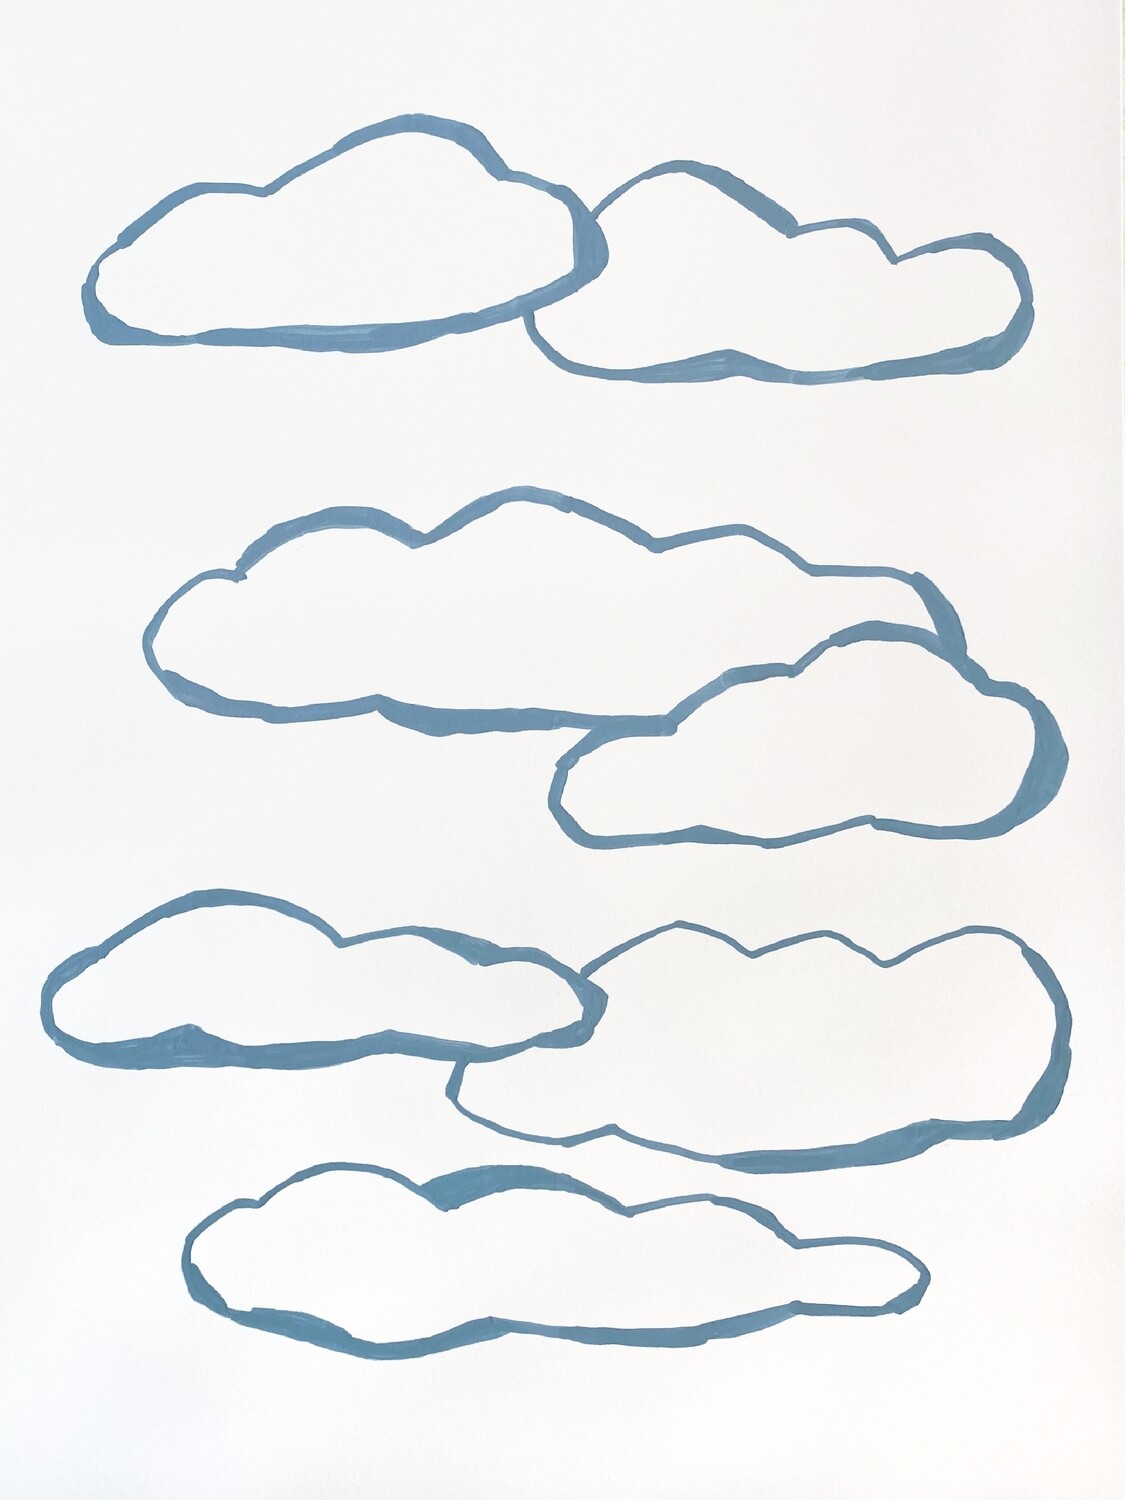 "Seven Clouds"